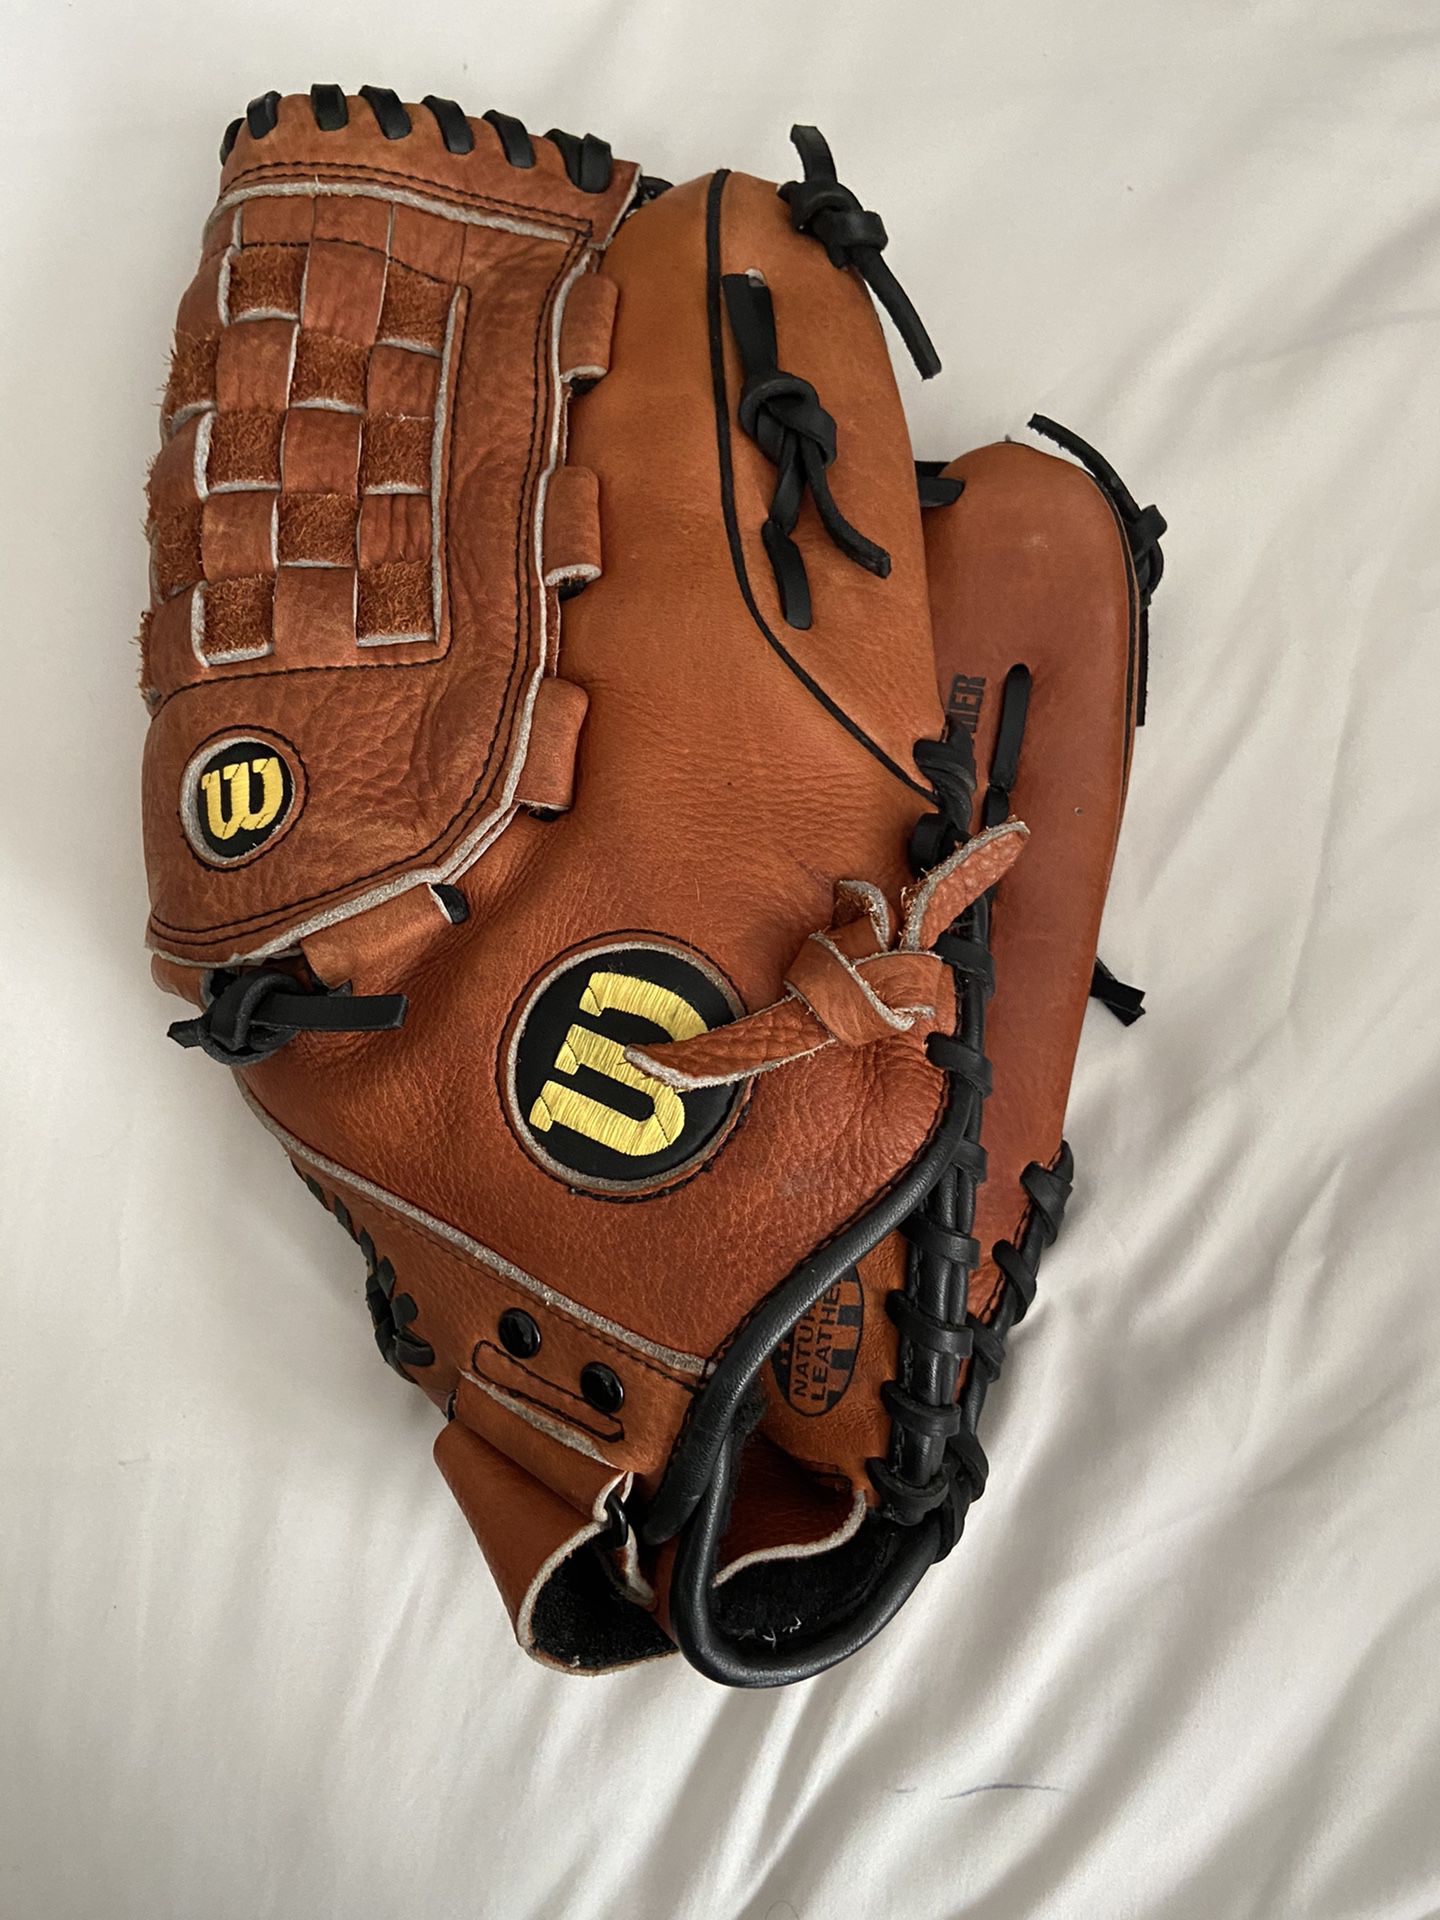 Wilson large 12 1/2” softball glove